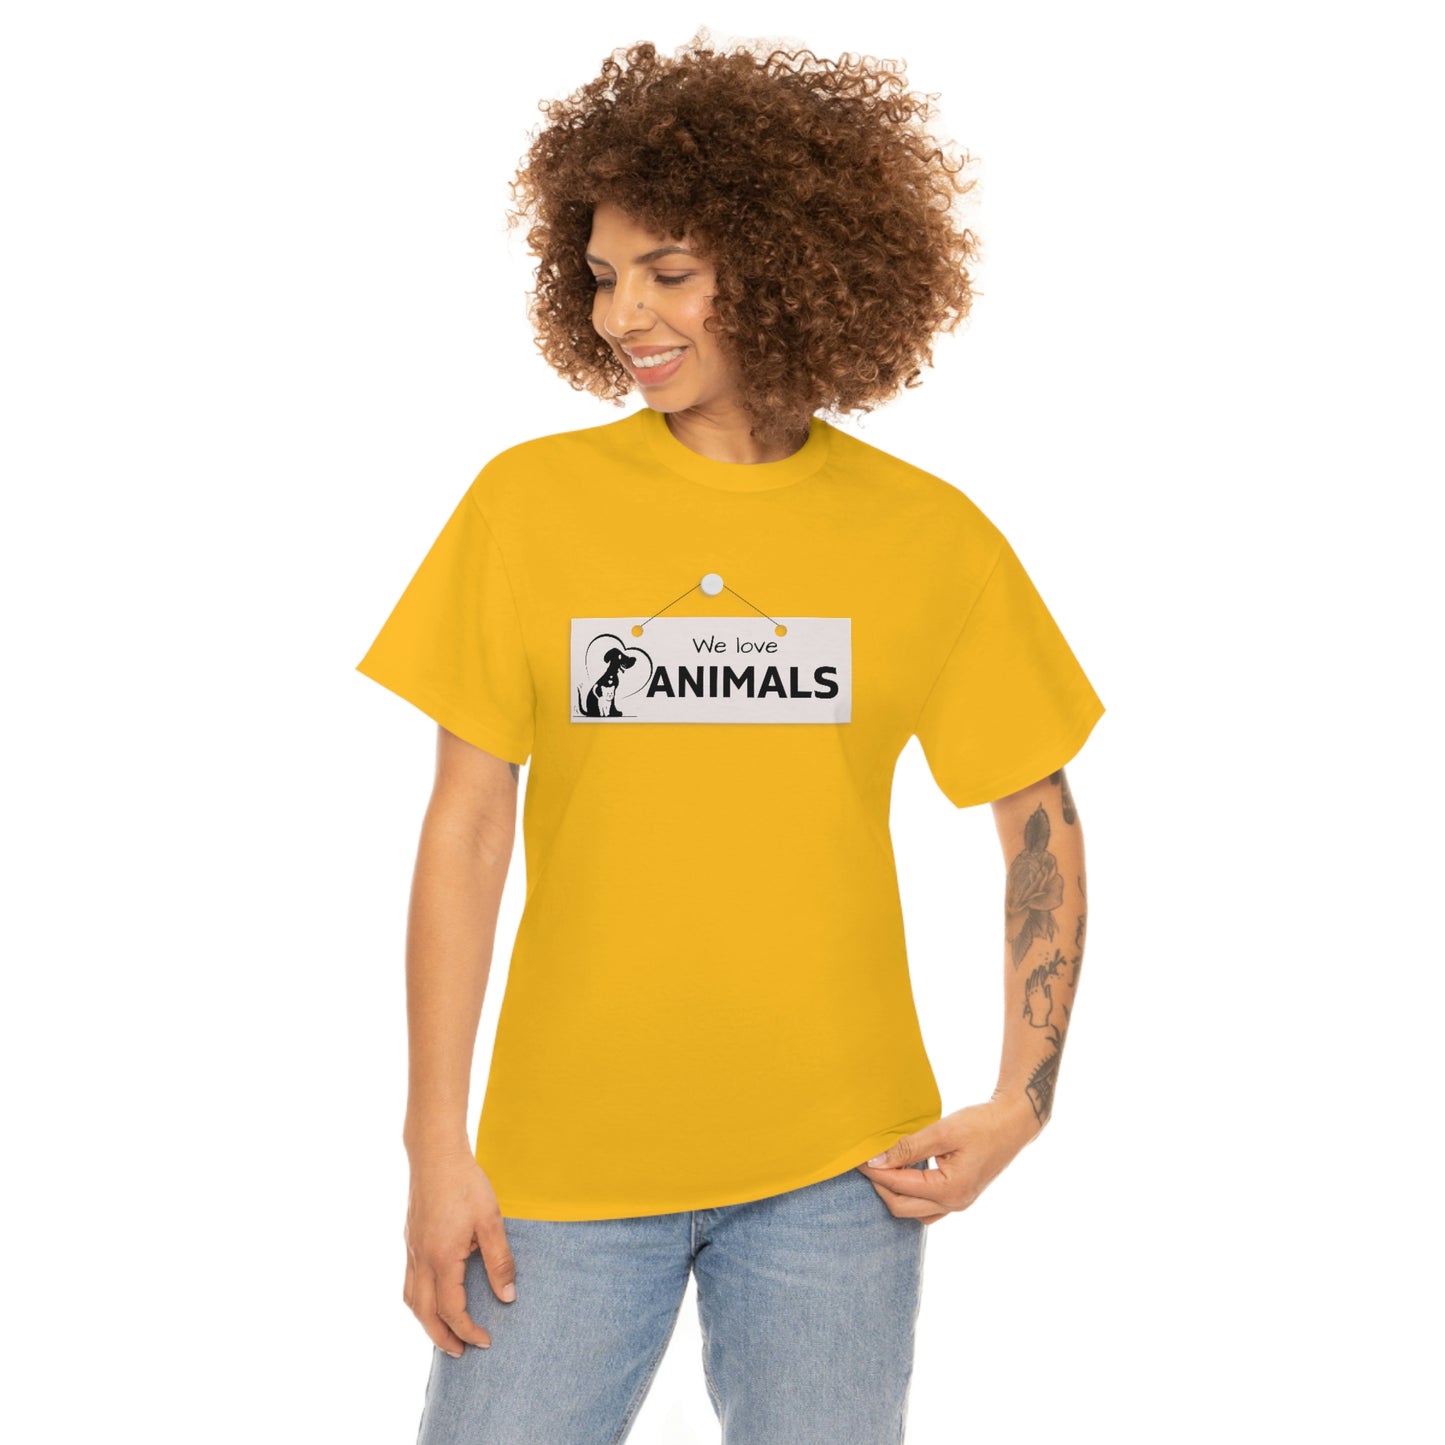 We love animals Logo plate design Graphic tee shirt